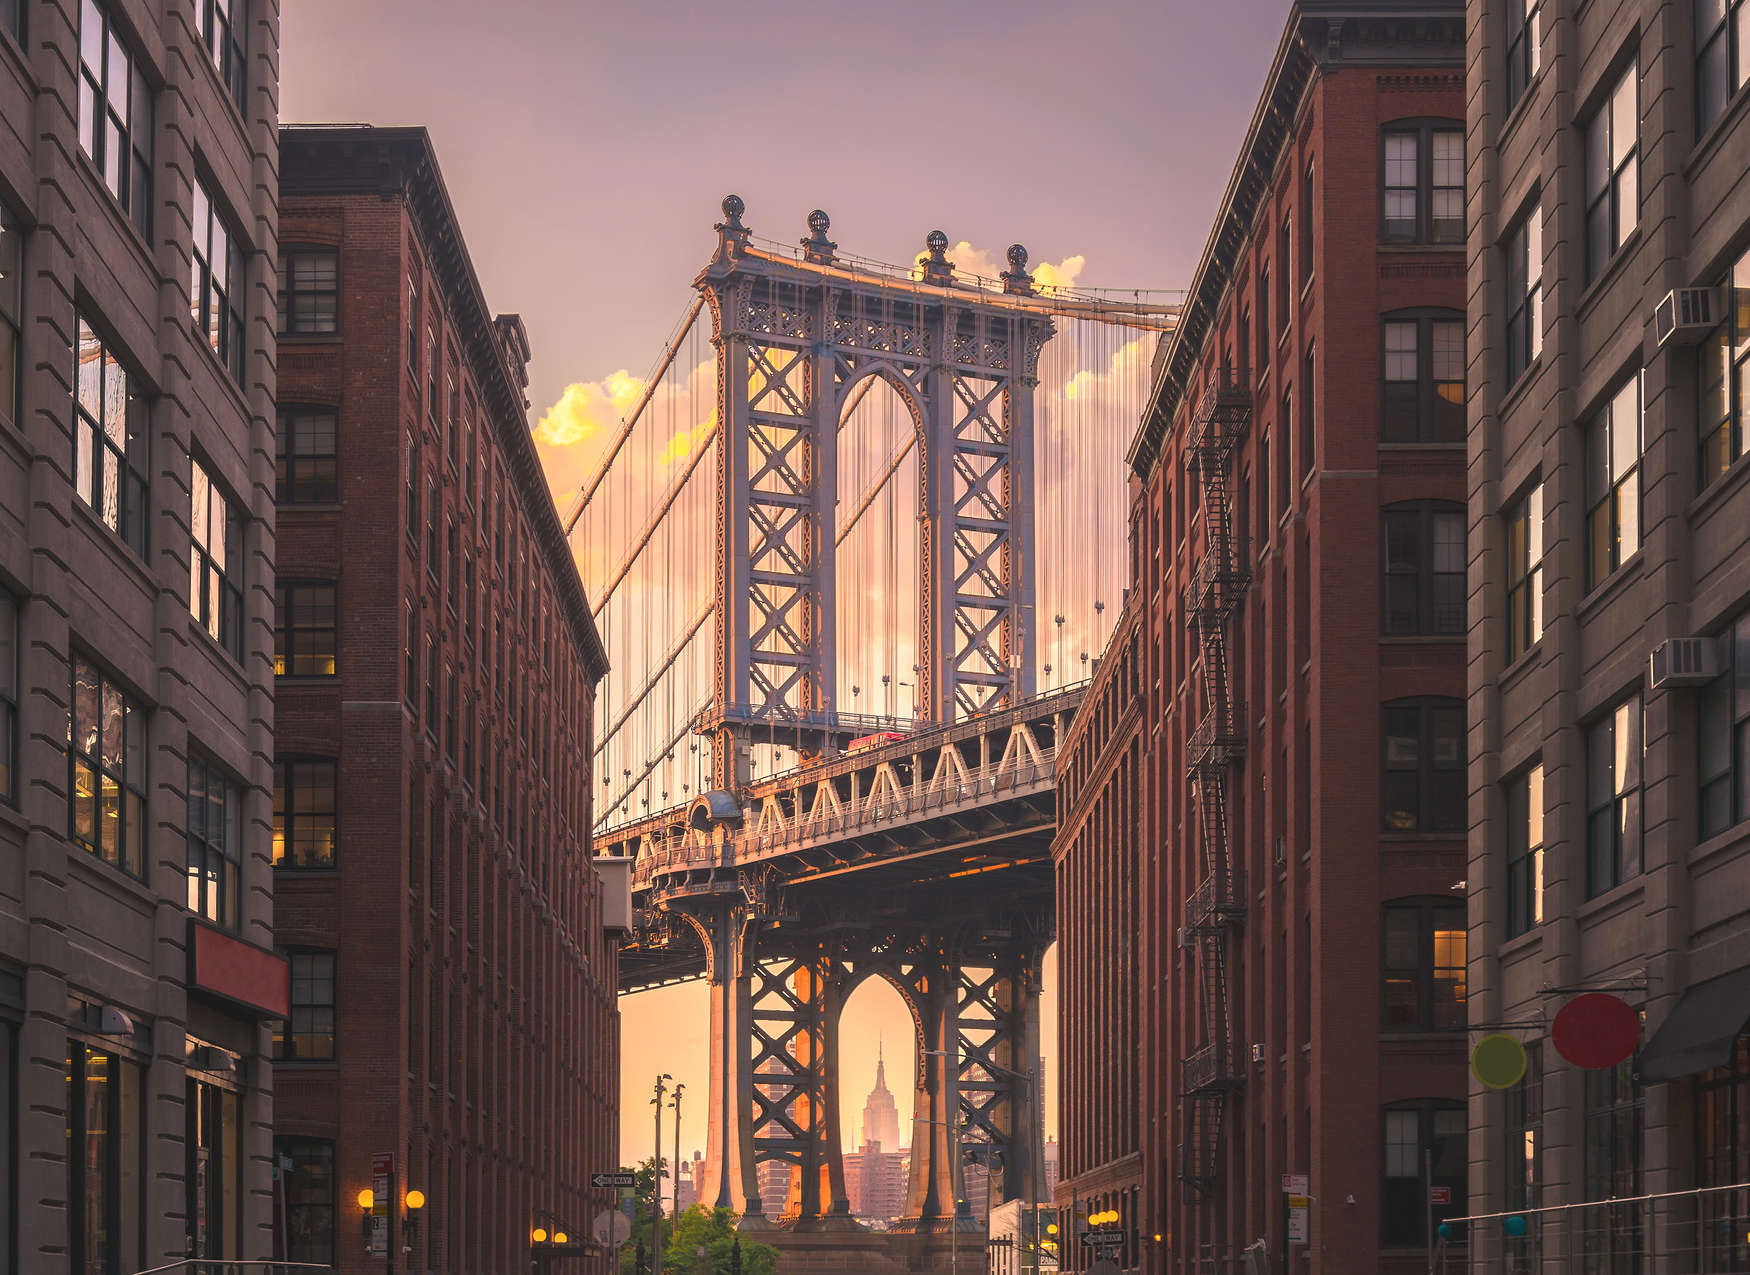             Brooklyn Bridge from Street View - Brown, Grey
        